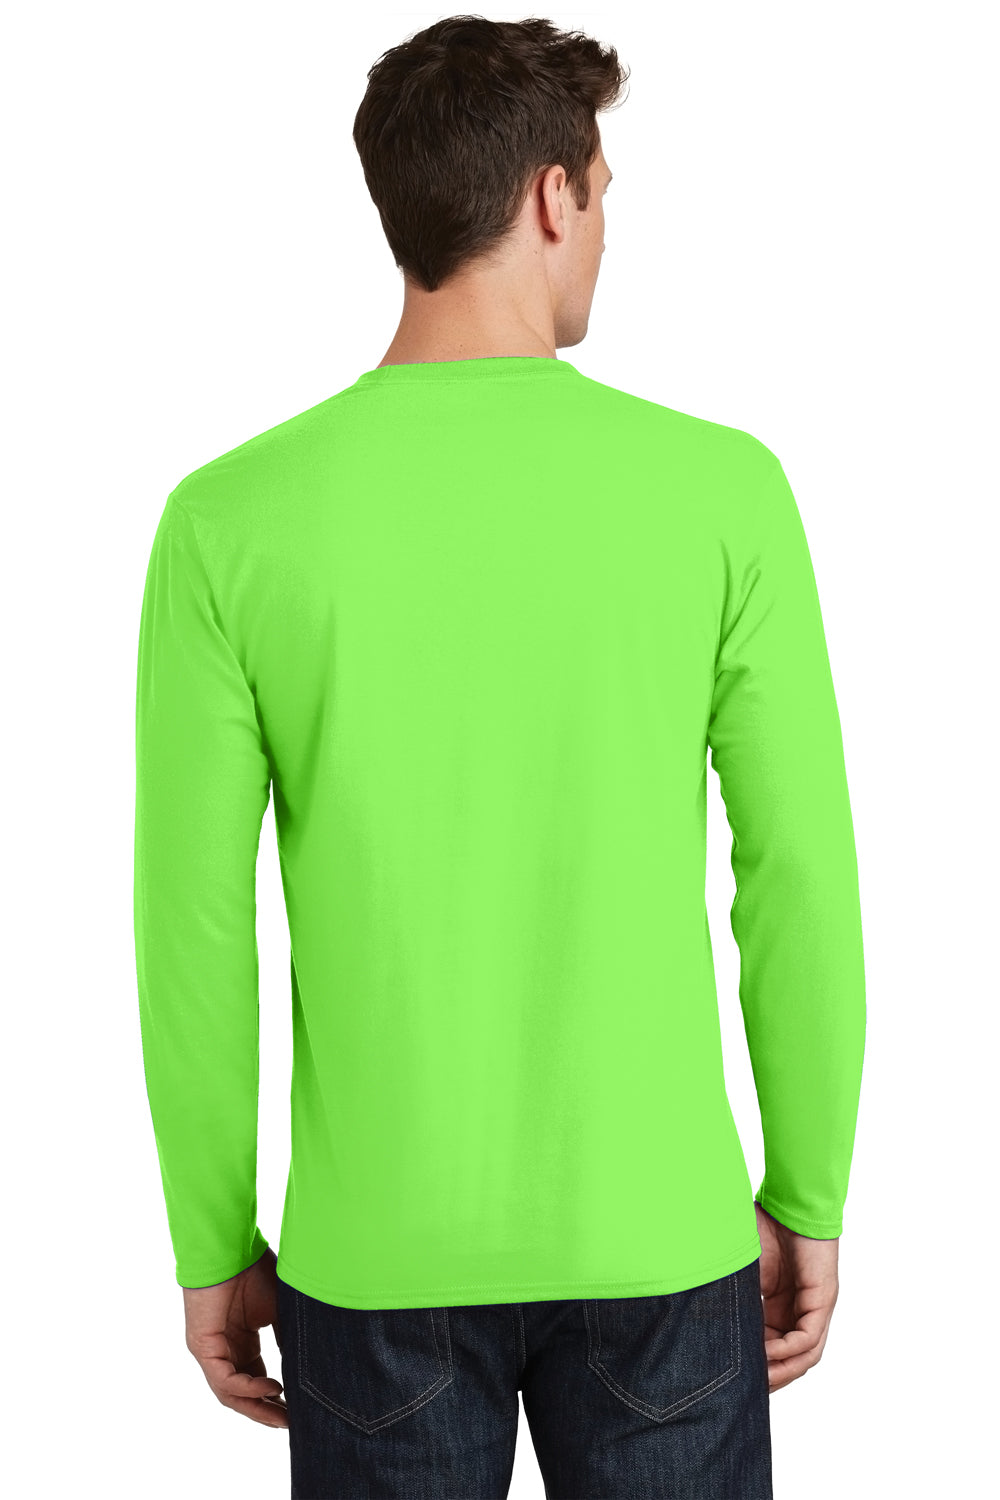 Port & Company PC450LS Mens Fan Favorite Long Sleeve Crewneck T-Shirt Flash Green Back